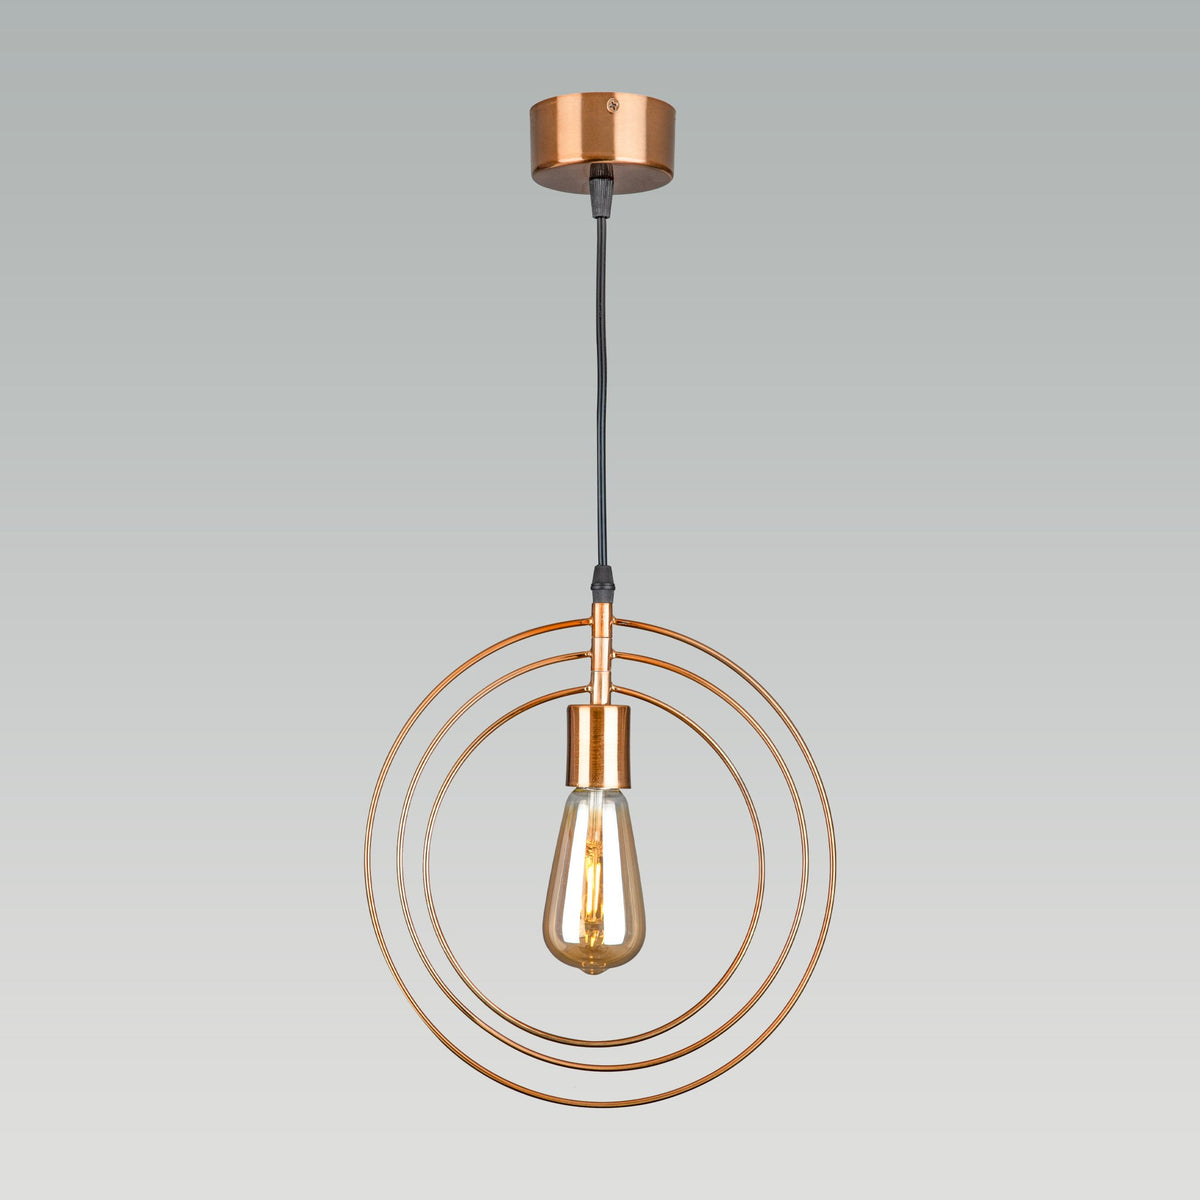 Shop Copper Rings Pendant Light online